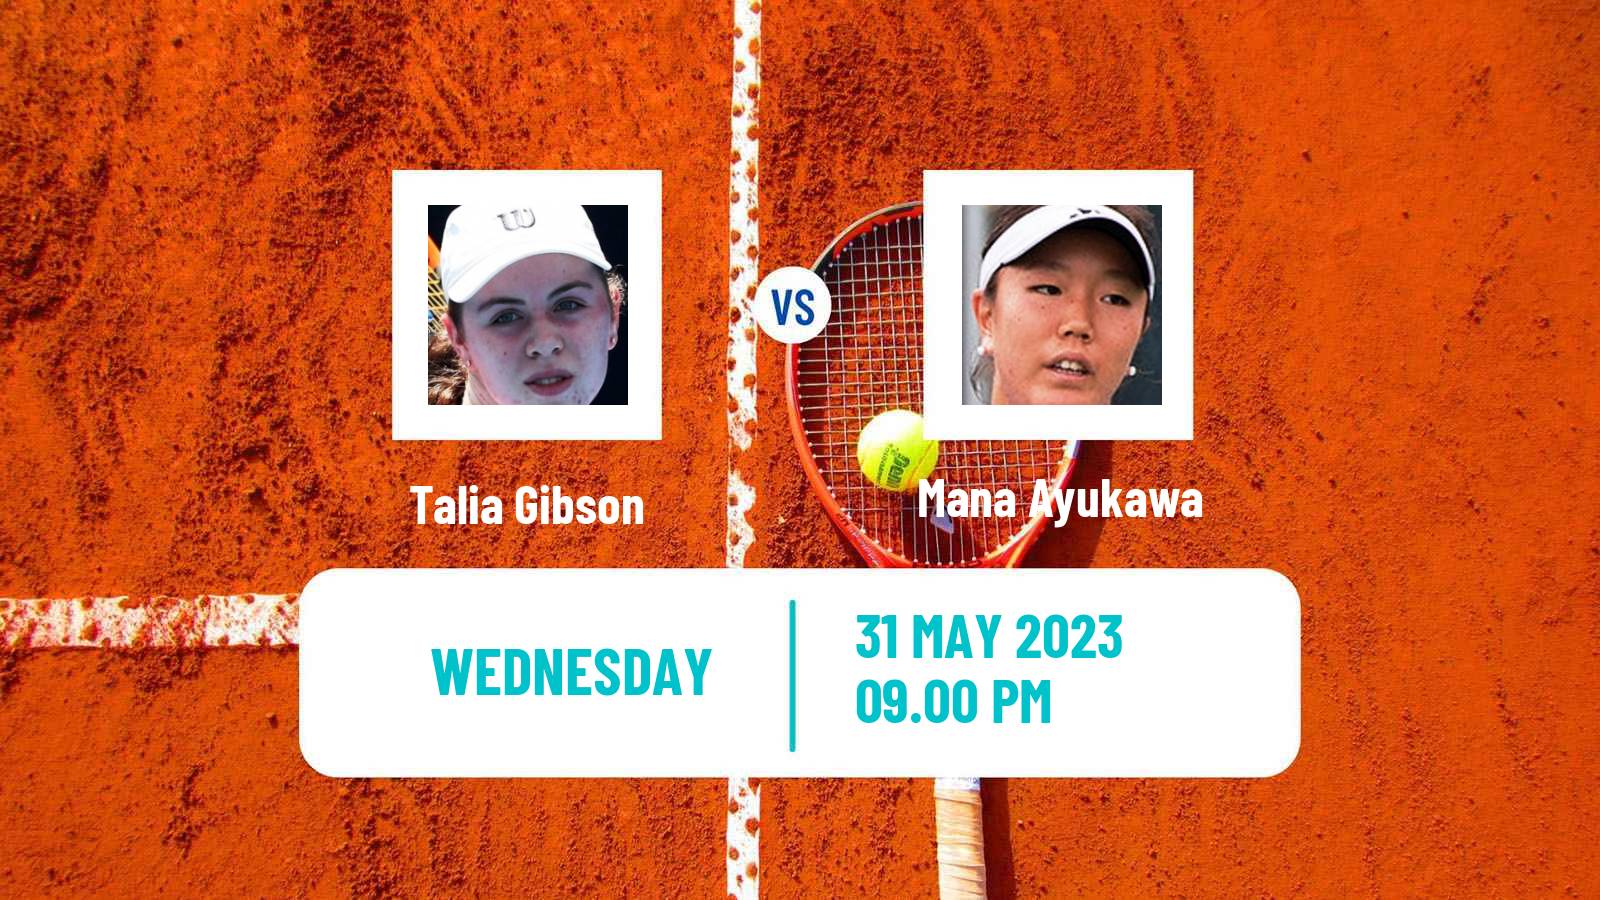 Tennis ITF W25 Tokyo Women Talia Gibson - Mana Ayukawa